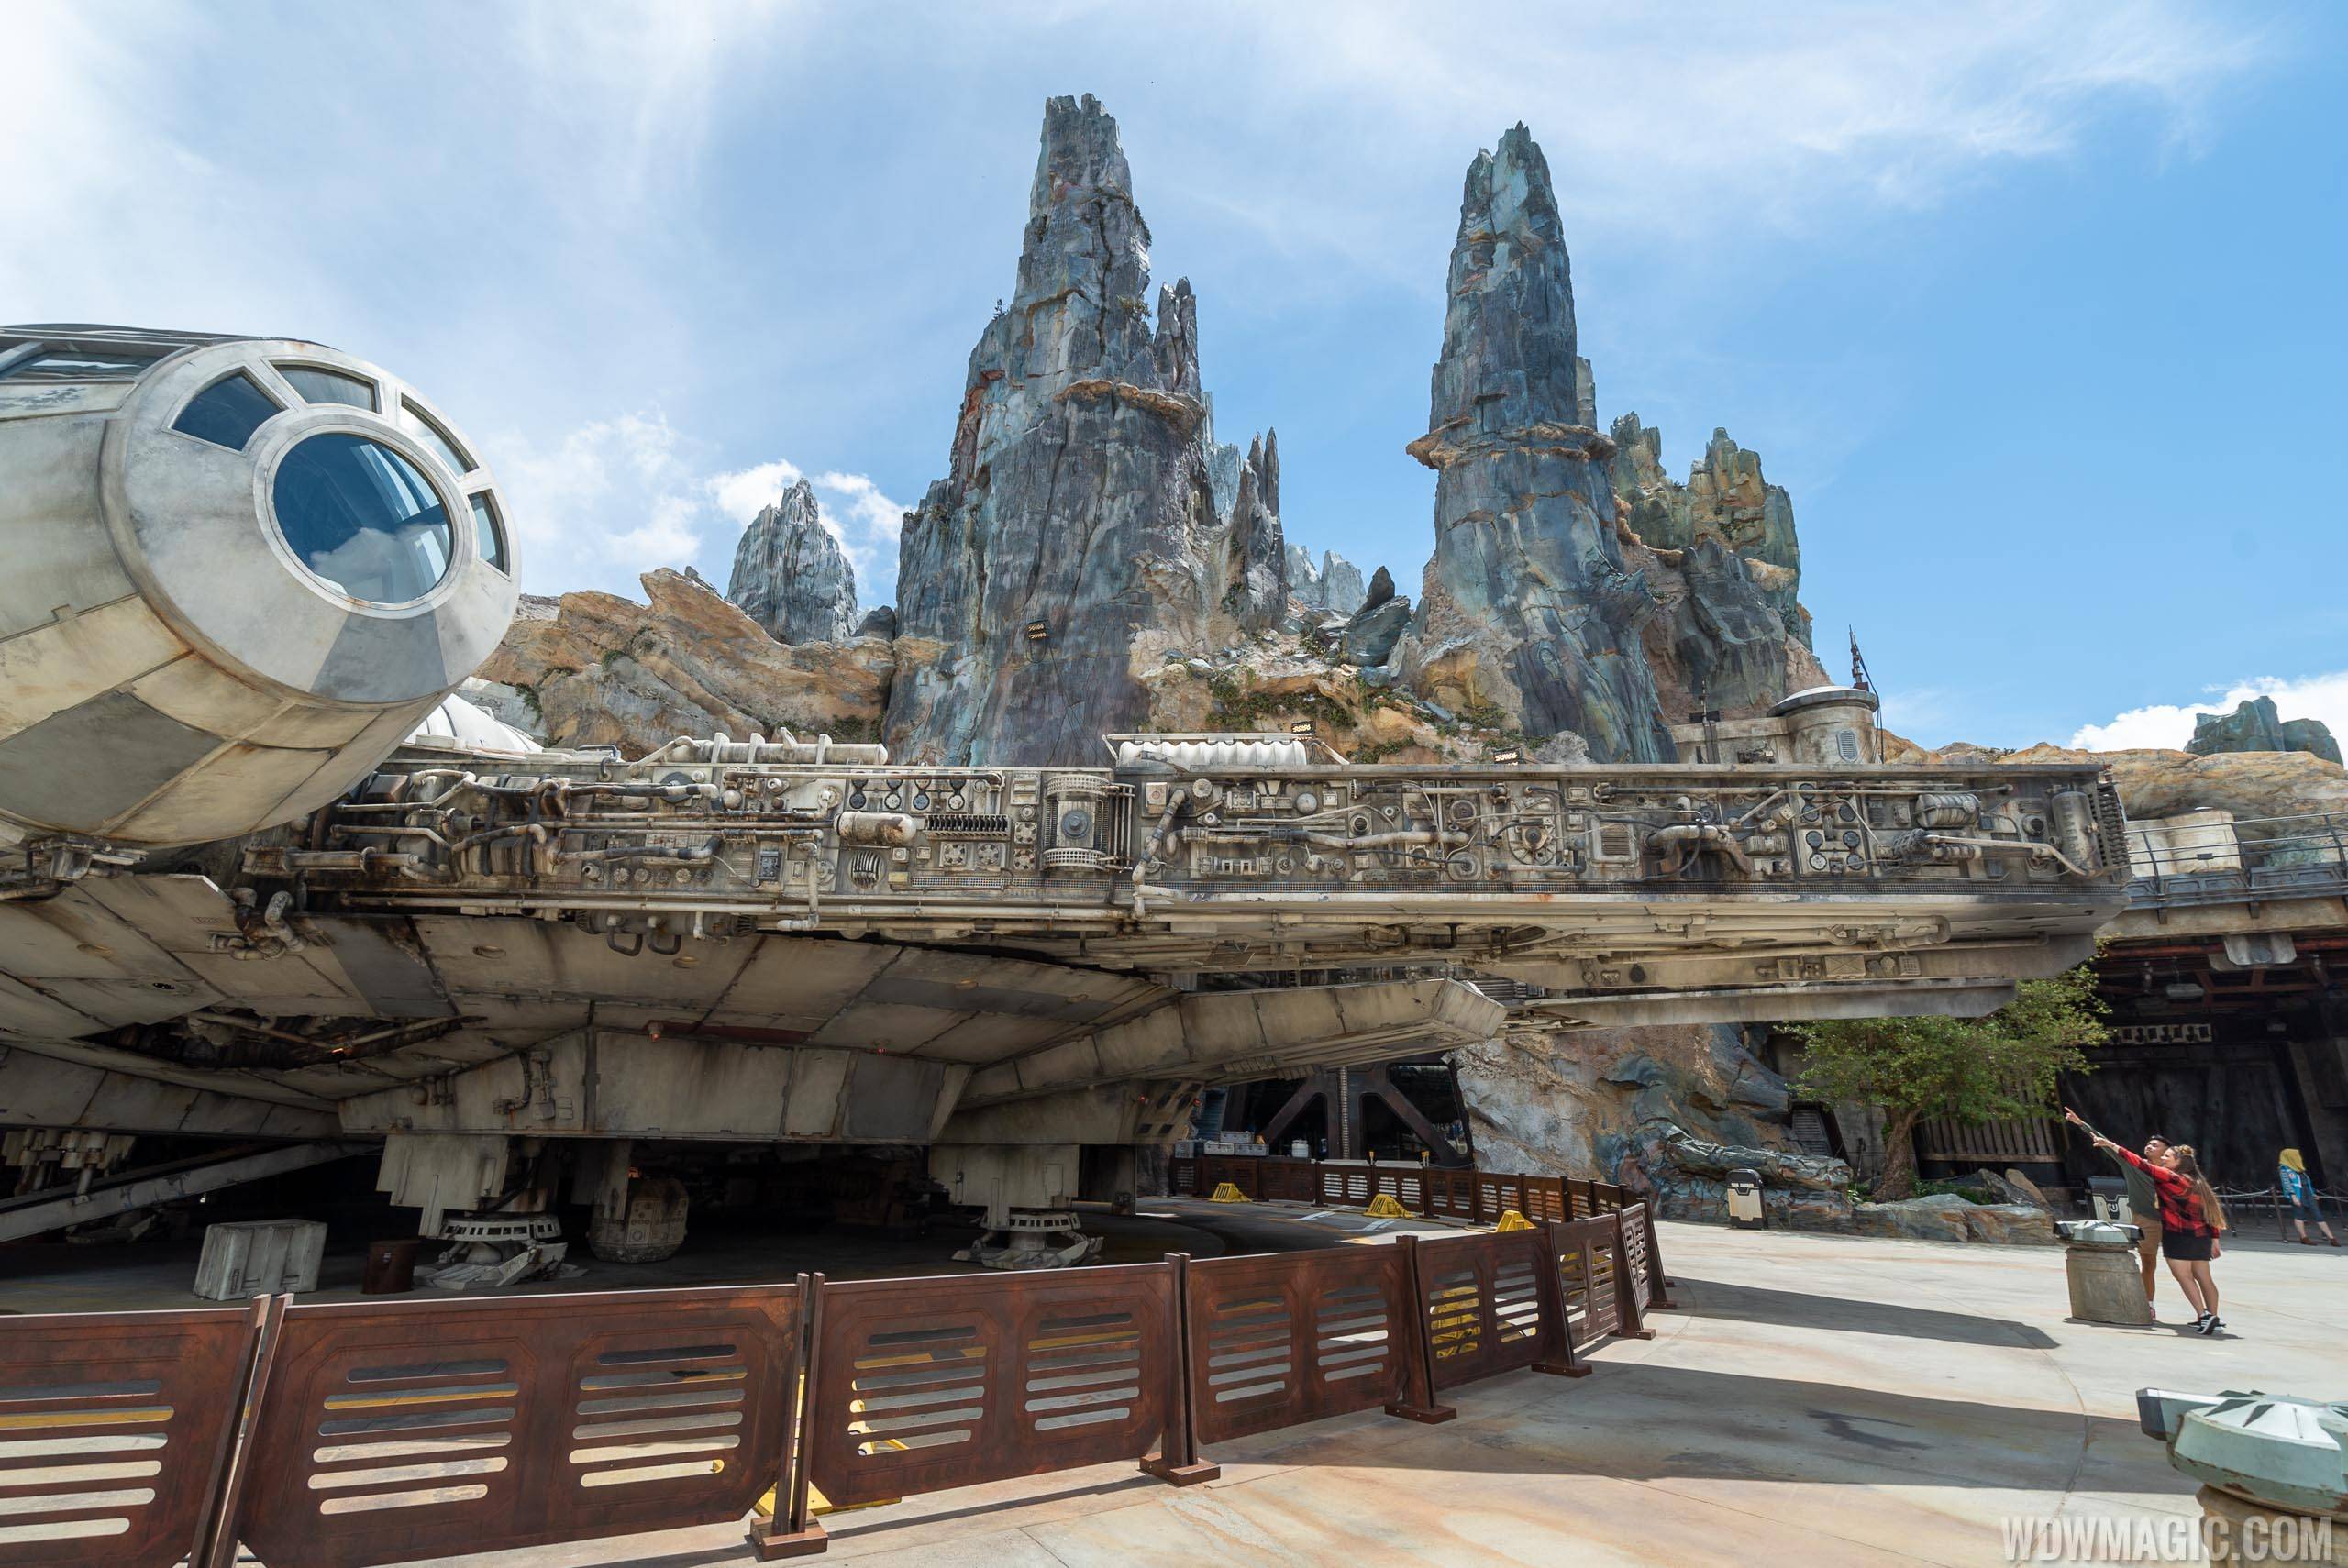 Closeup of the Millennium Falcon at Star Wars Galaxy's Edge in Walt Disney World